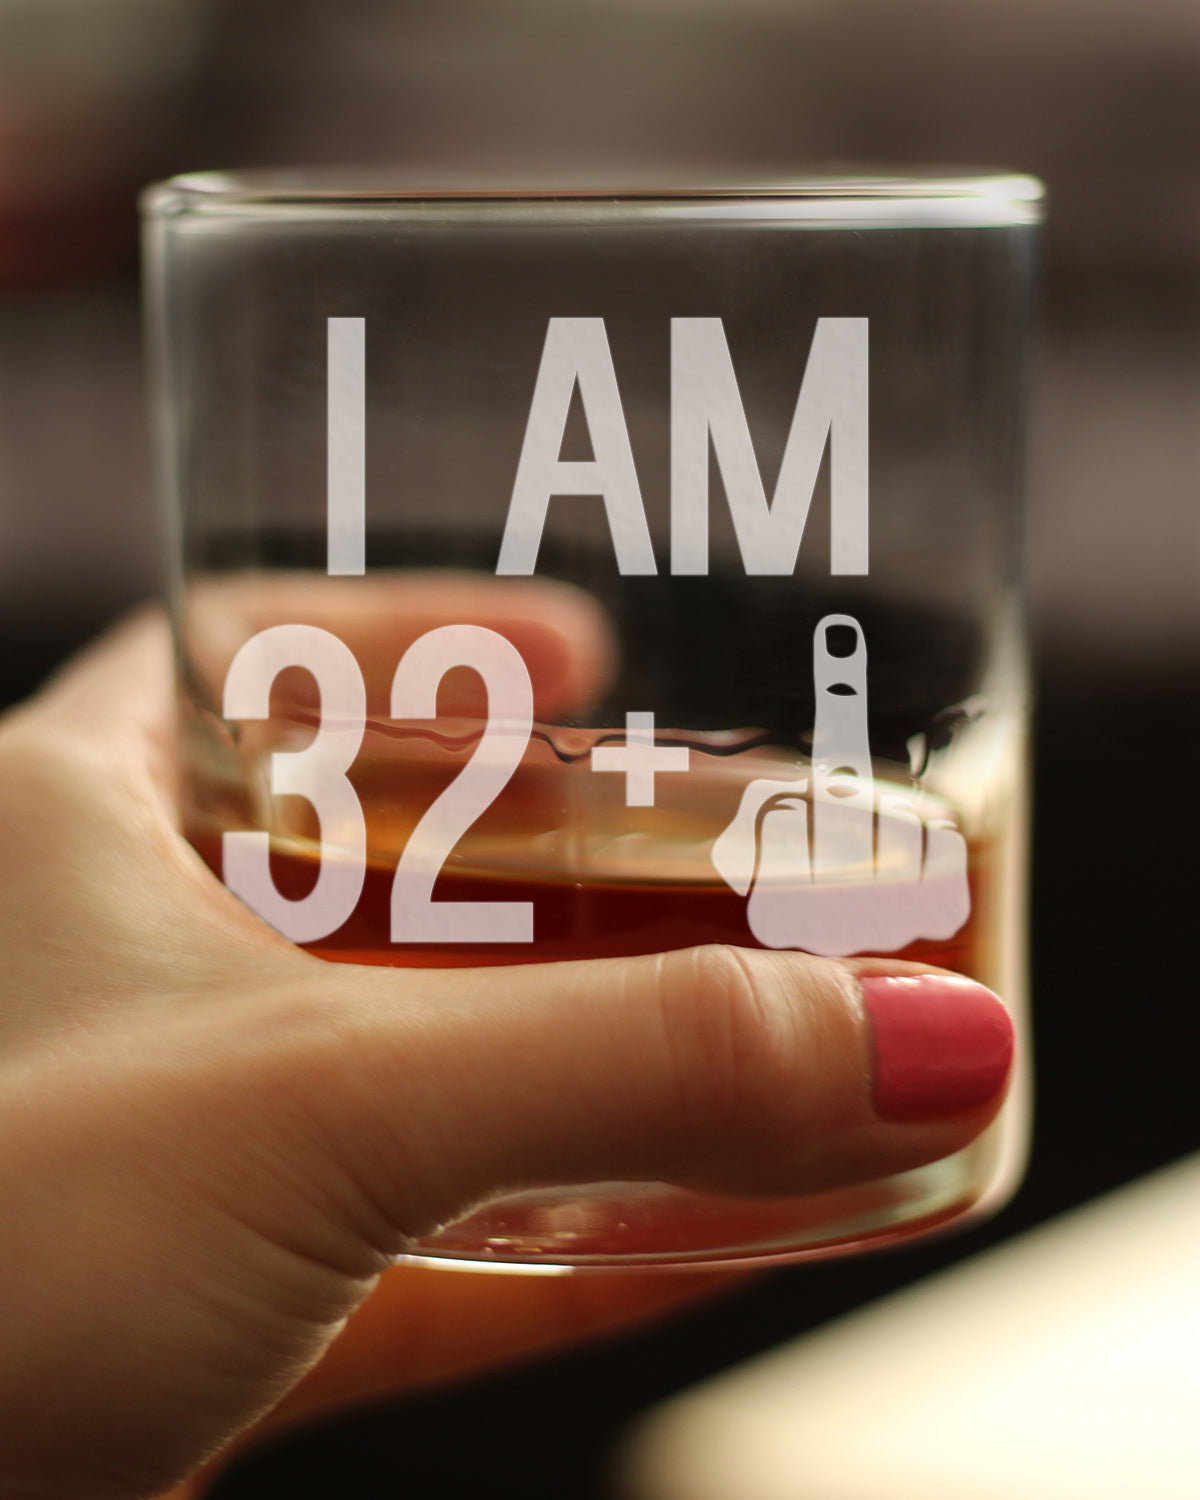 32 + 1 Middle Finger - Funny 33rd Birthday Whiskey Rocks Glass Gifts for Men &amp; Women Turning 33 - Fun Whisky Drinking Tumbler